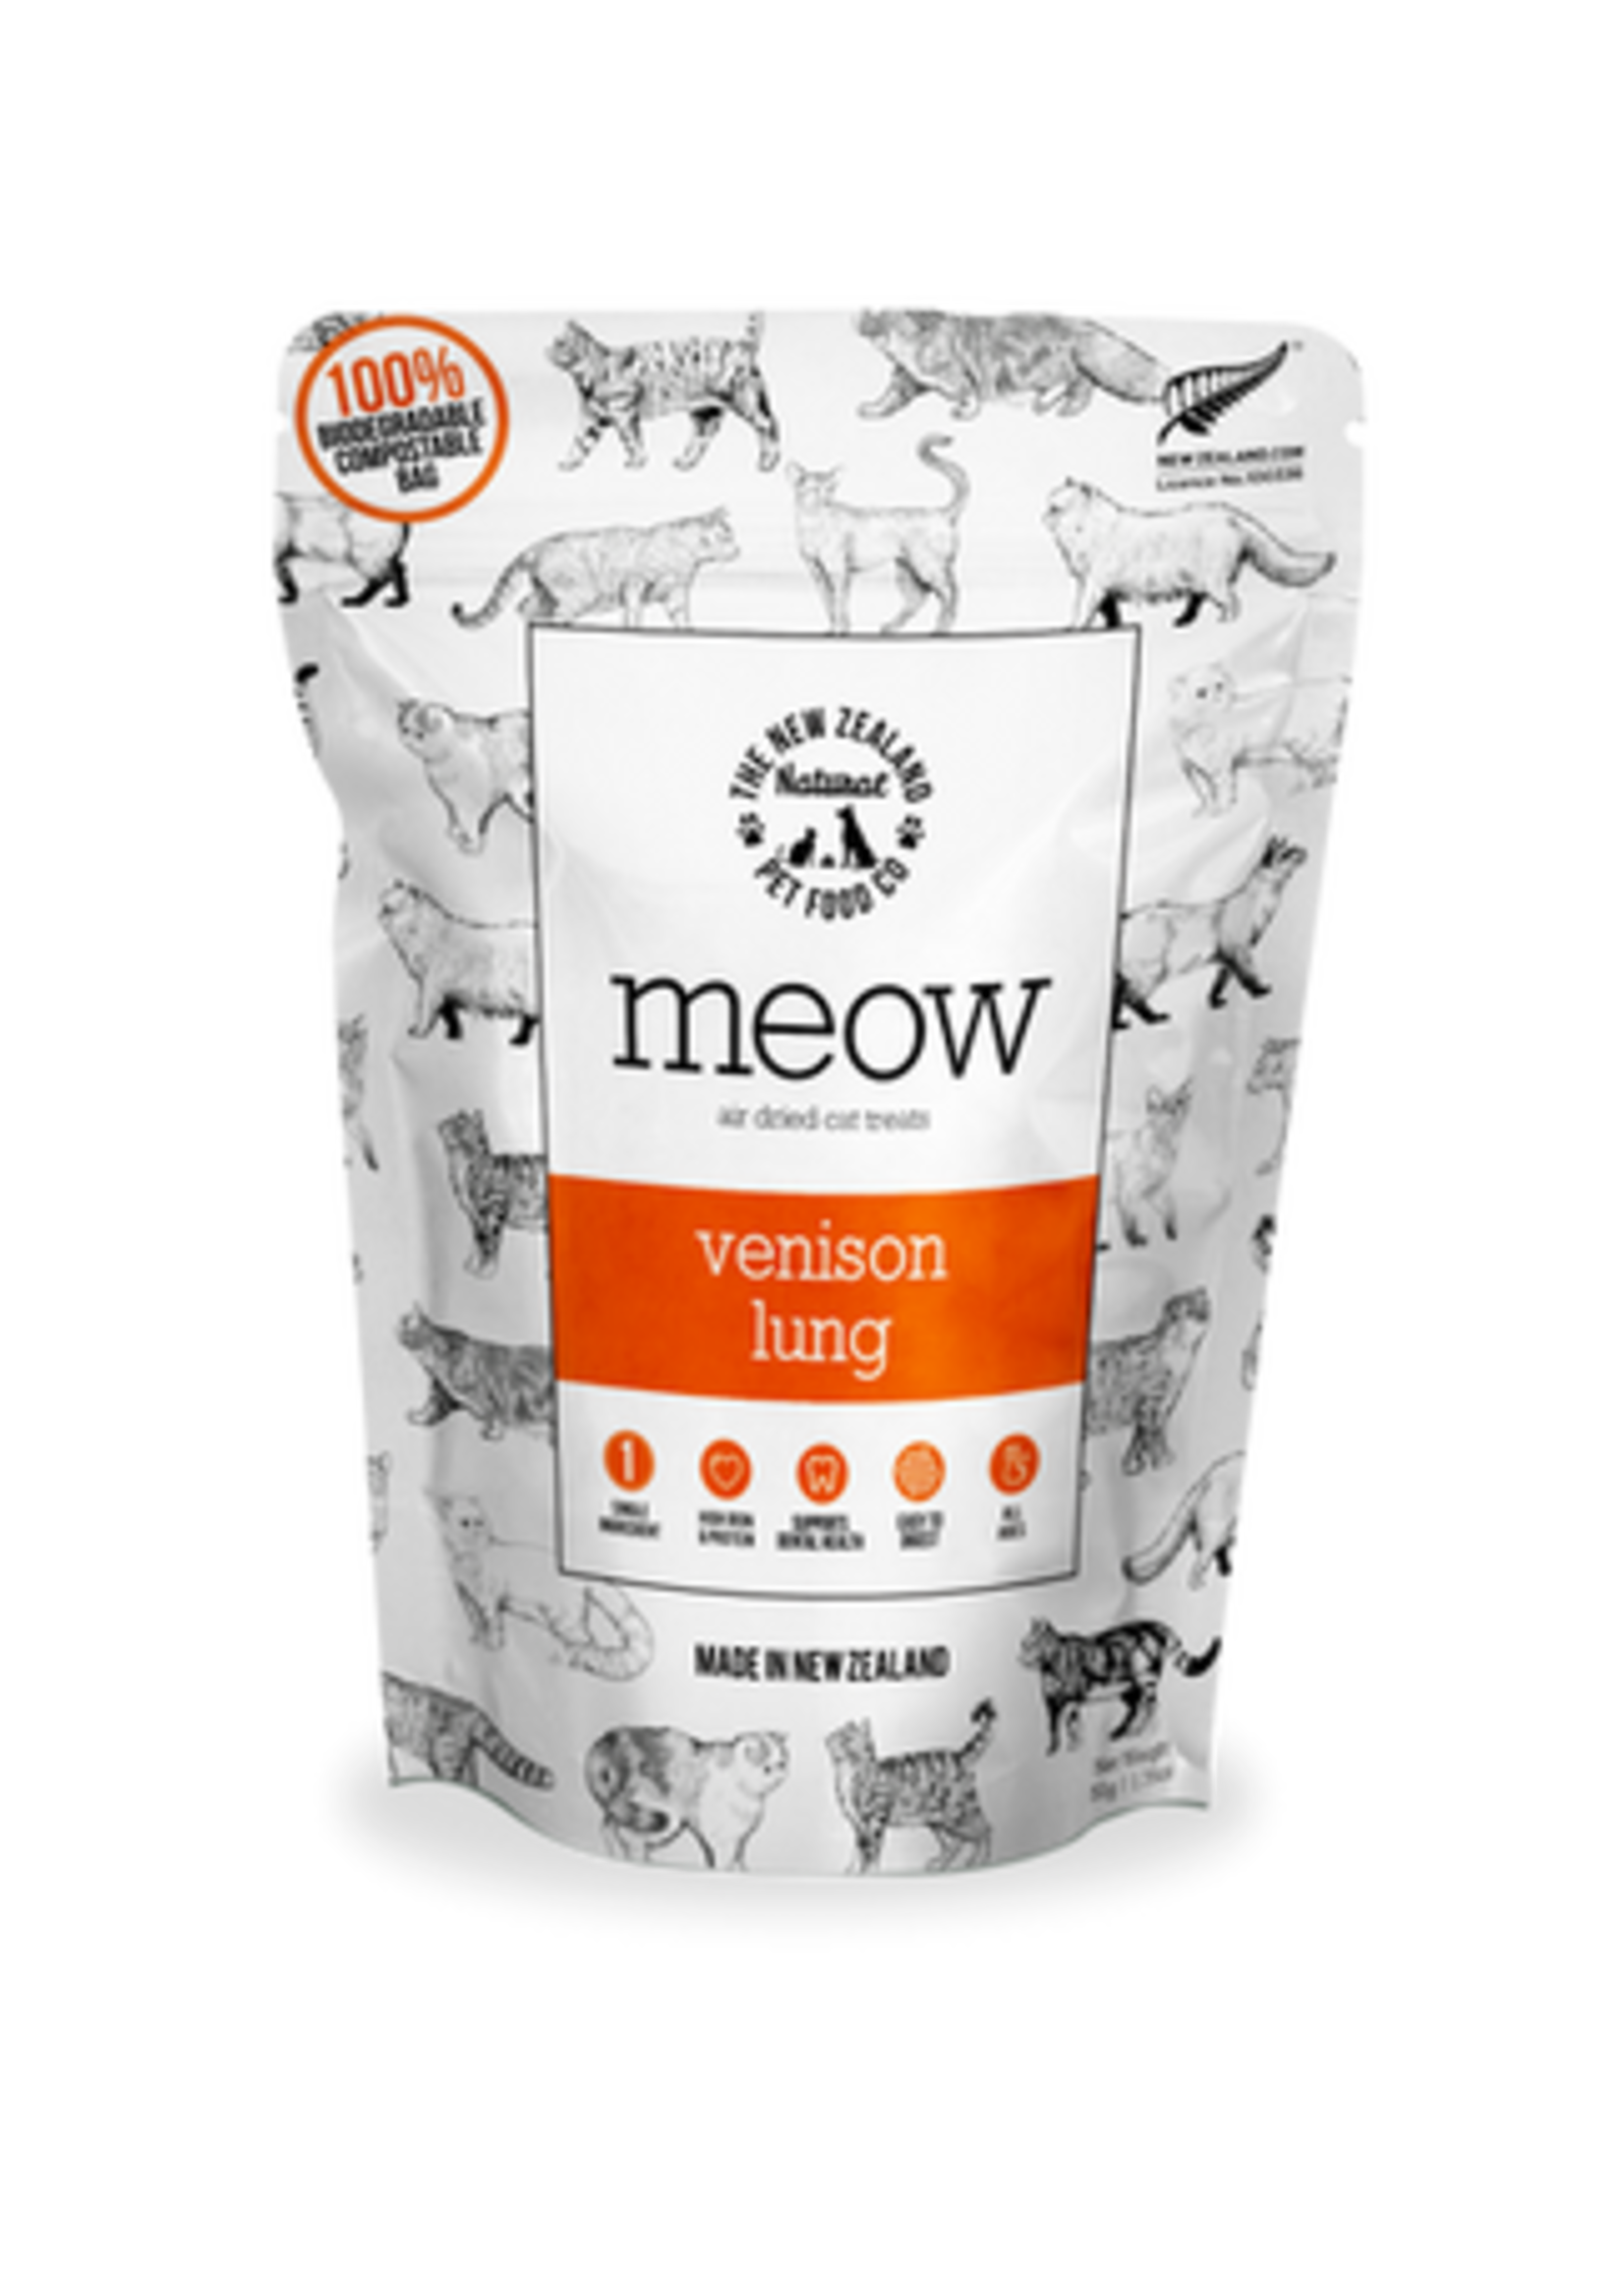 New Zealand Natural Pet Food Co NZ Natural Pet Food Co Meow Venison Lung Treat 50g